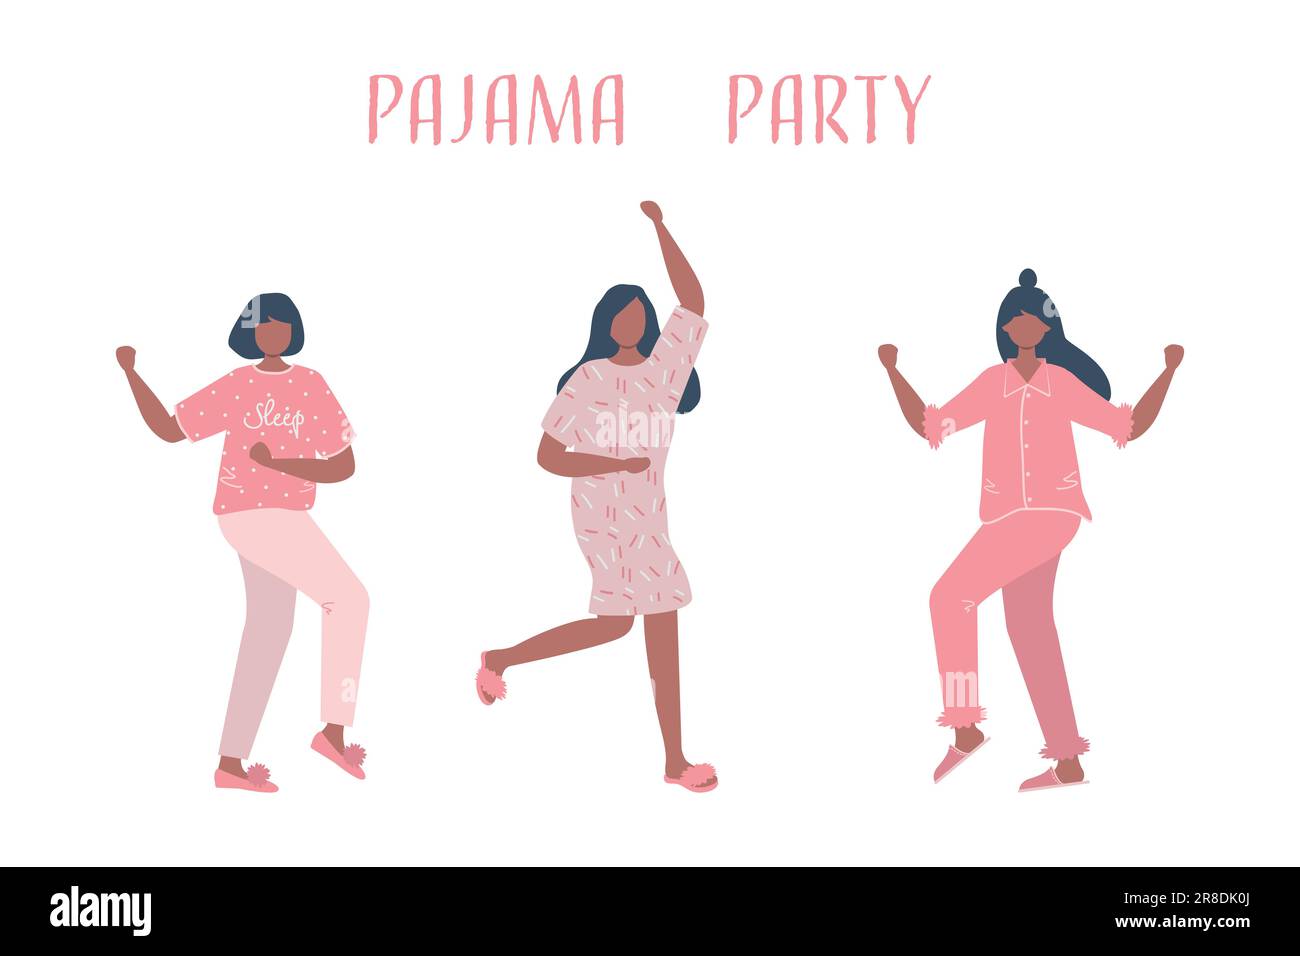 Pajama party. Three young women in pink pajamas are dancing. Slumber ...